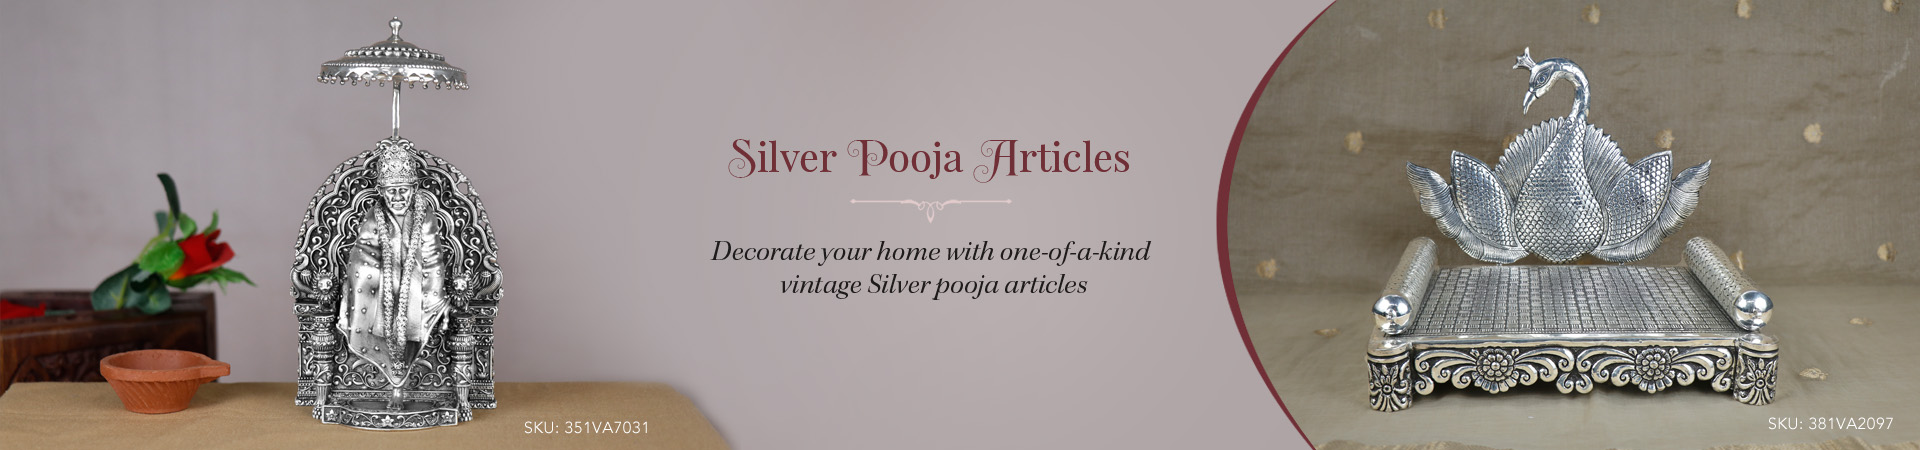 Silver Pooja Items 